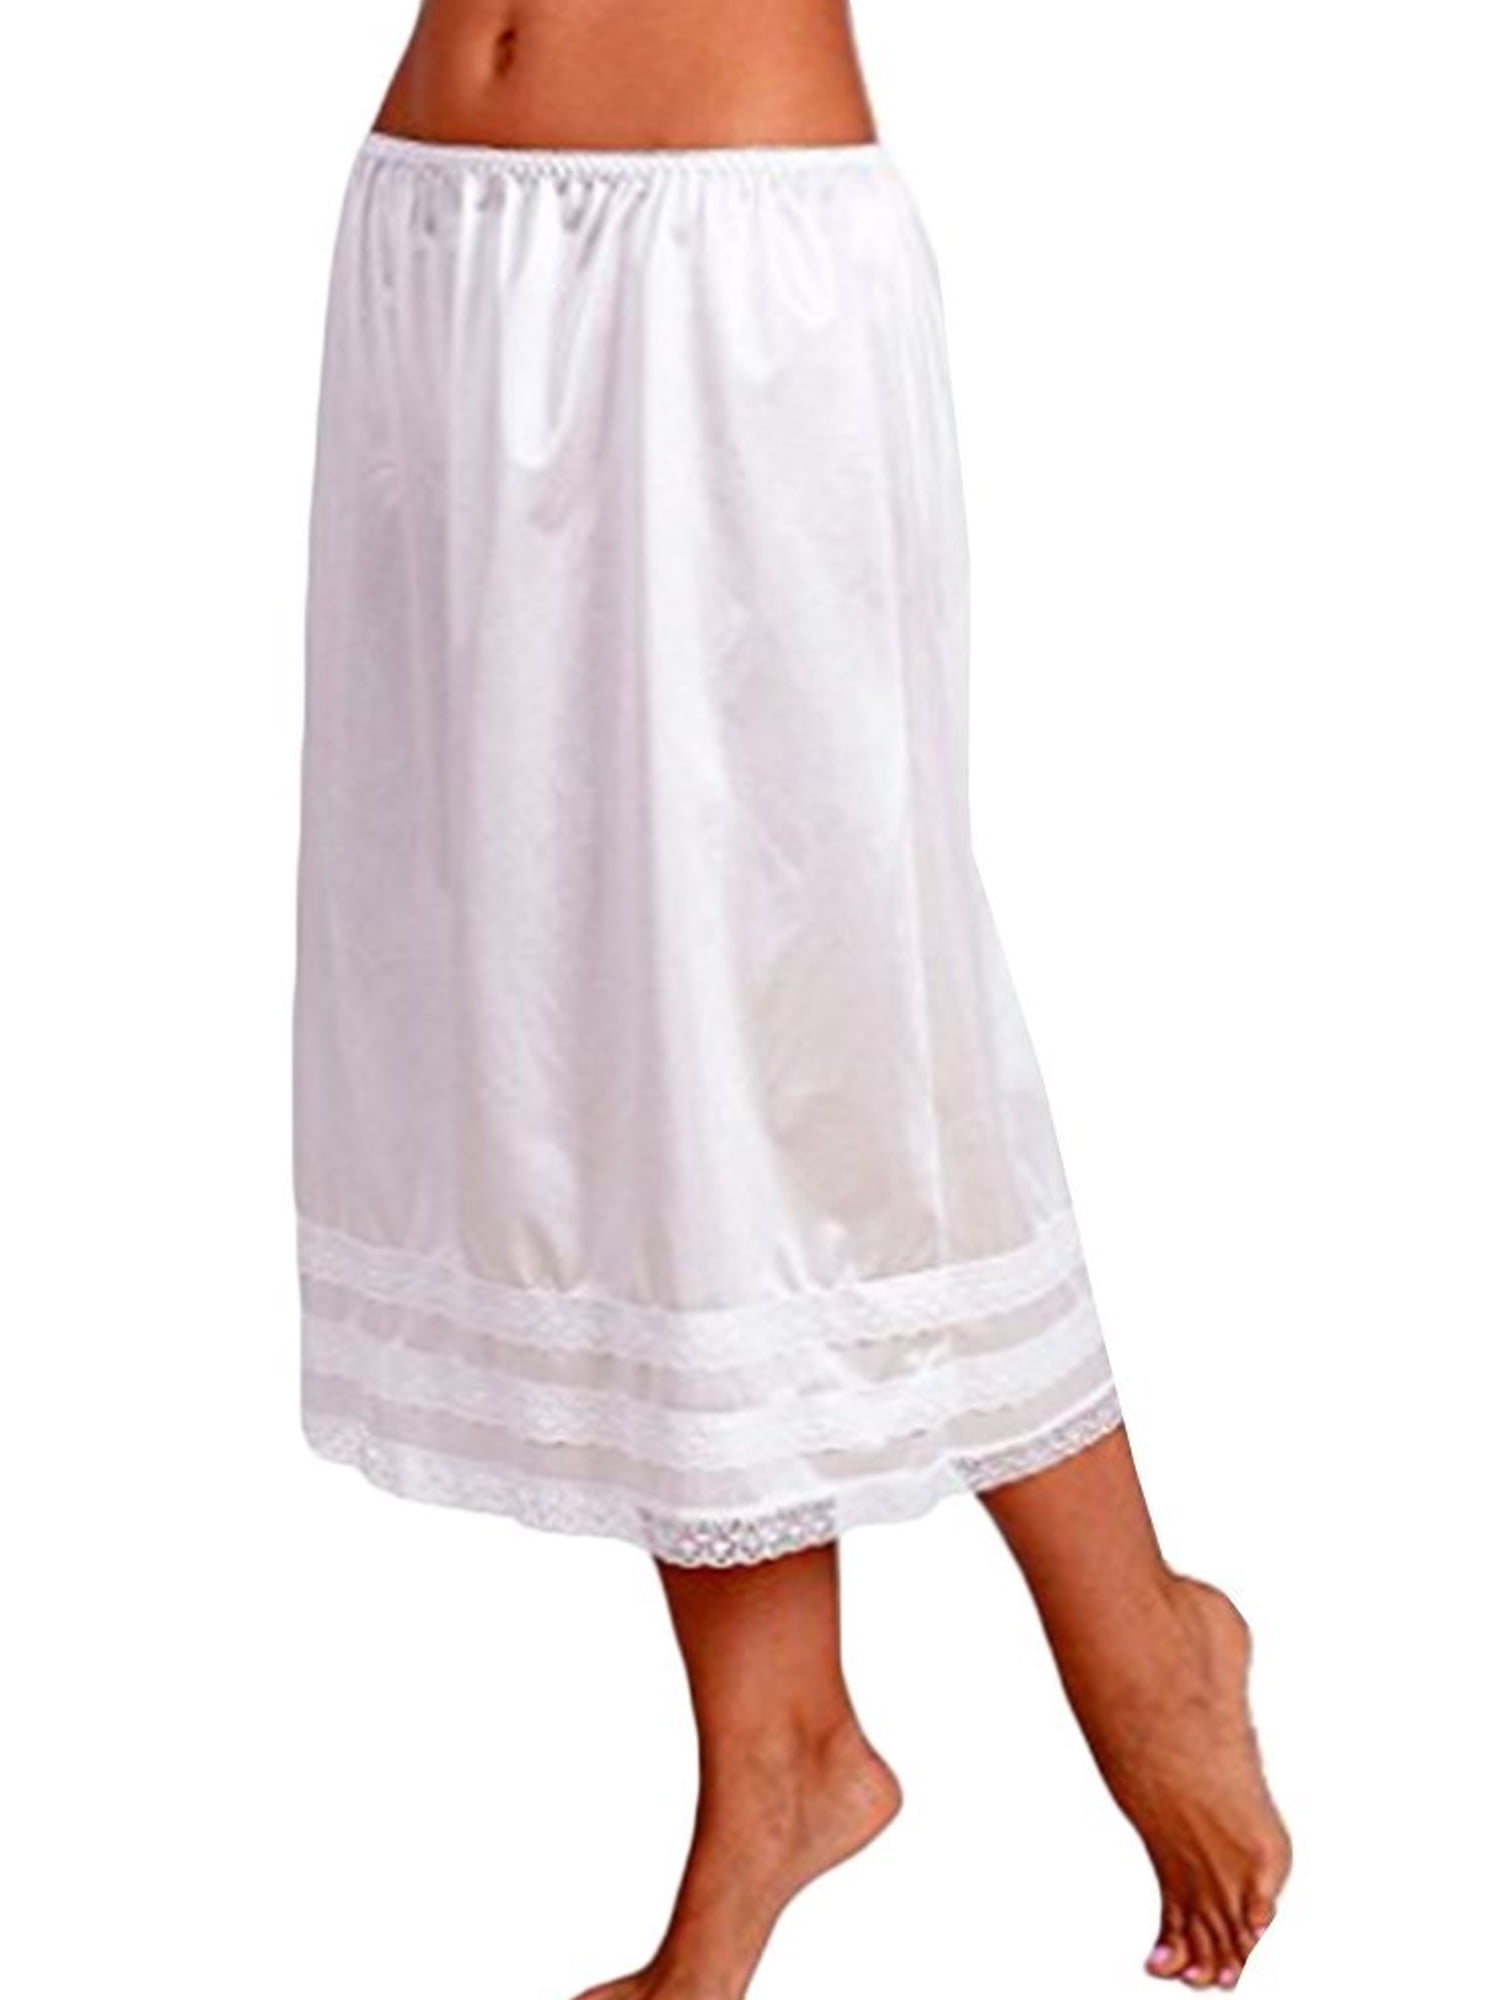 Musuos Women Dress Elastic High Waist Skirt With Petticoat Plus Size -  Walmart.com